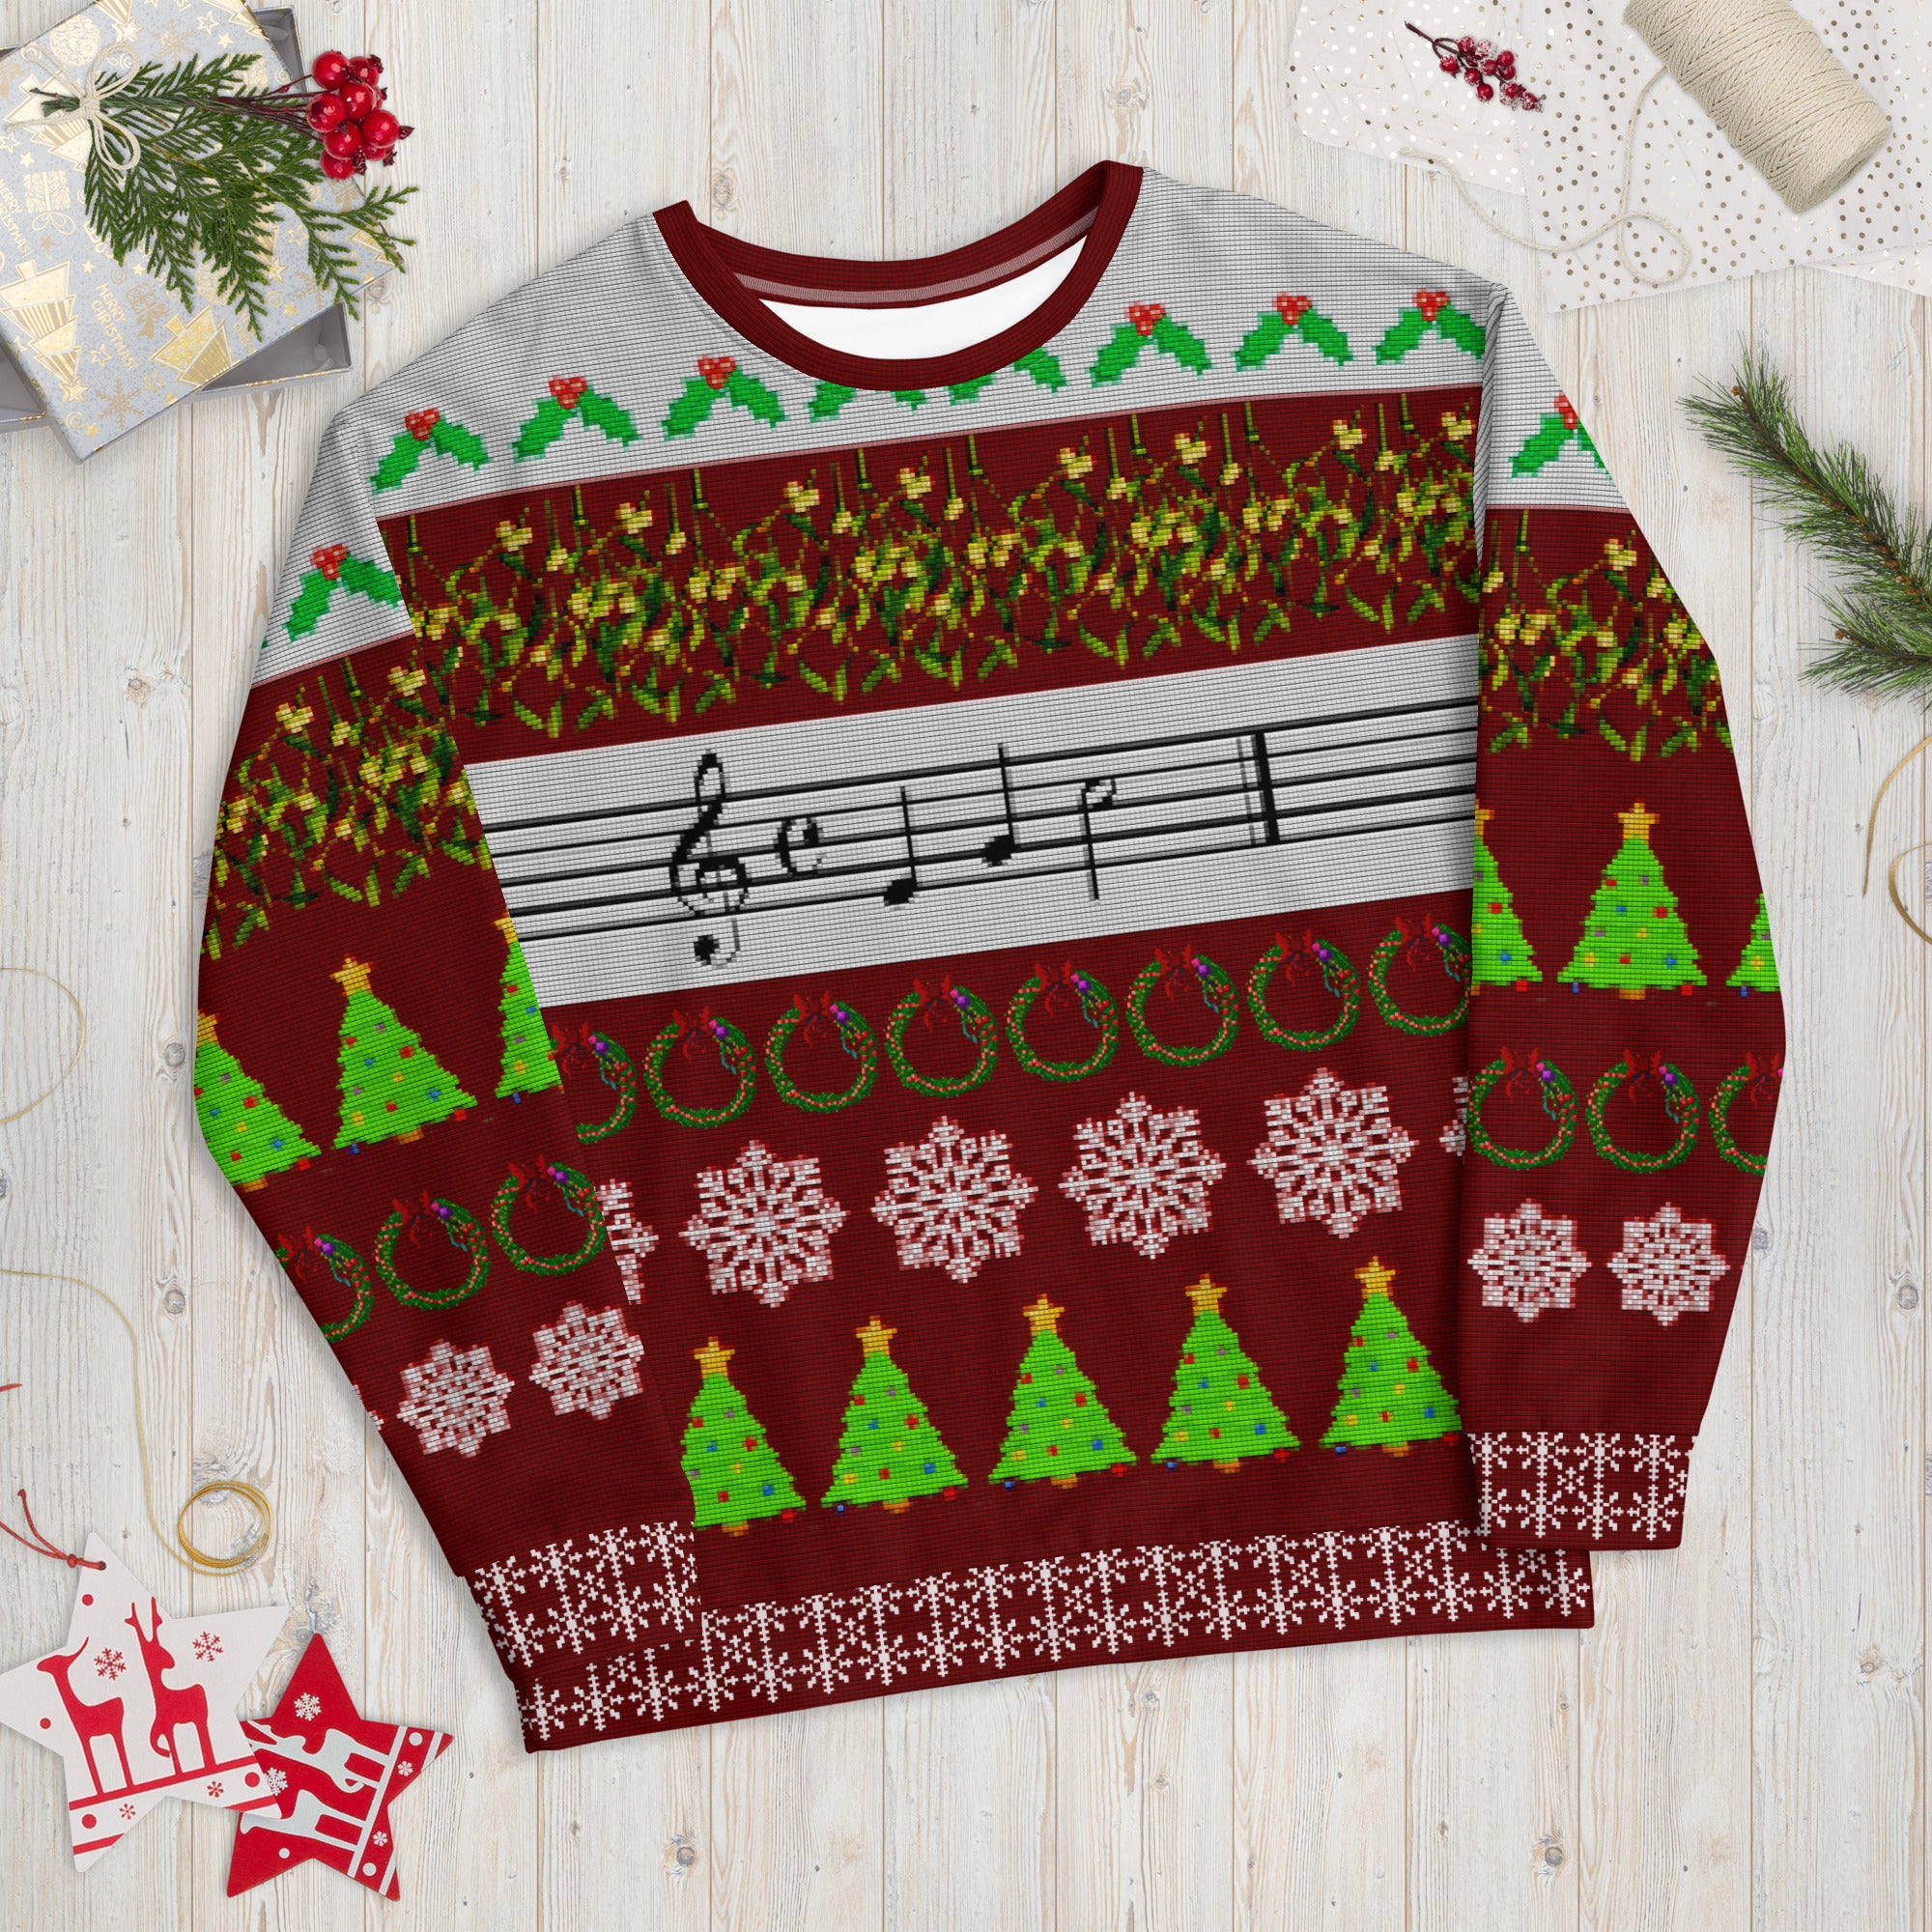 Mi-Sol-Do - Faux Ugly Christmas Sweater (Printed Sweatshirt)